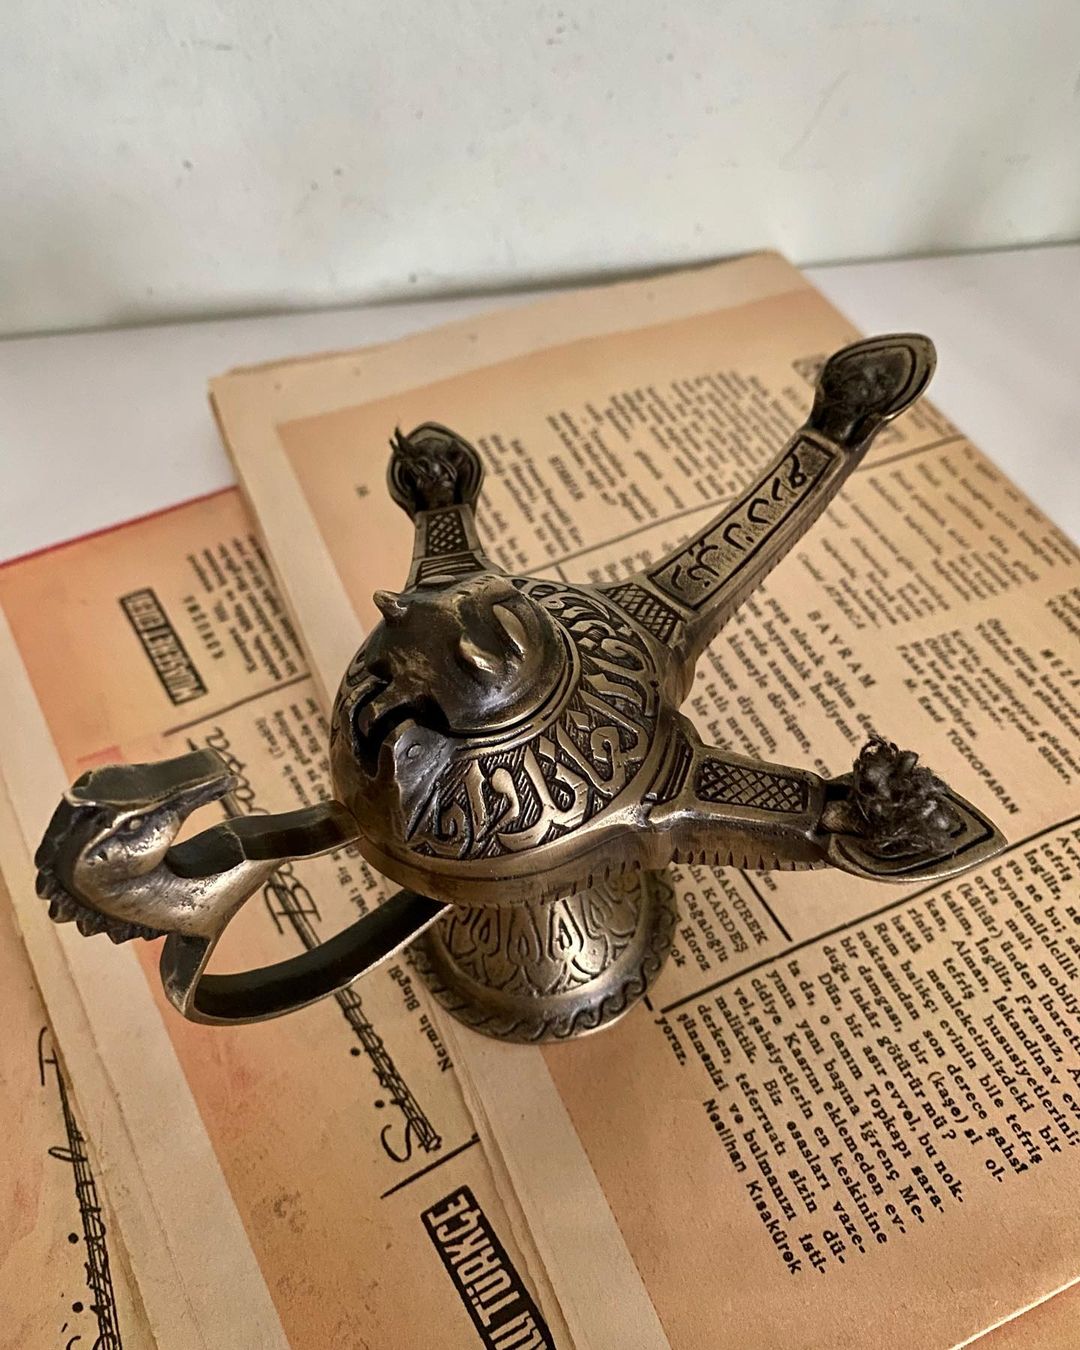 Antique Brass Candil (Gass Lamp) Oil Lamp